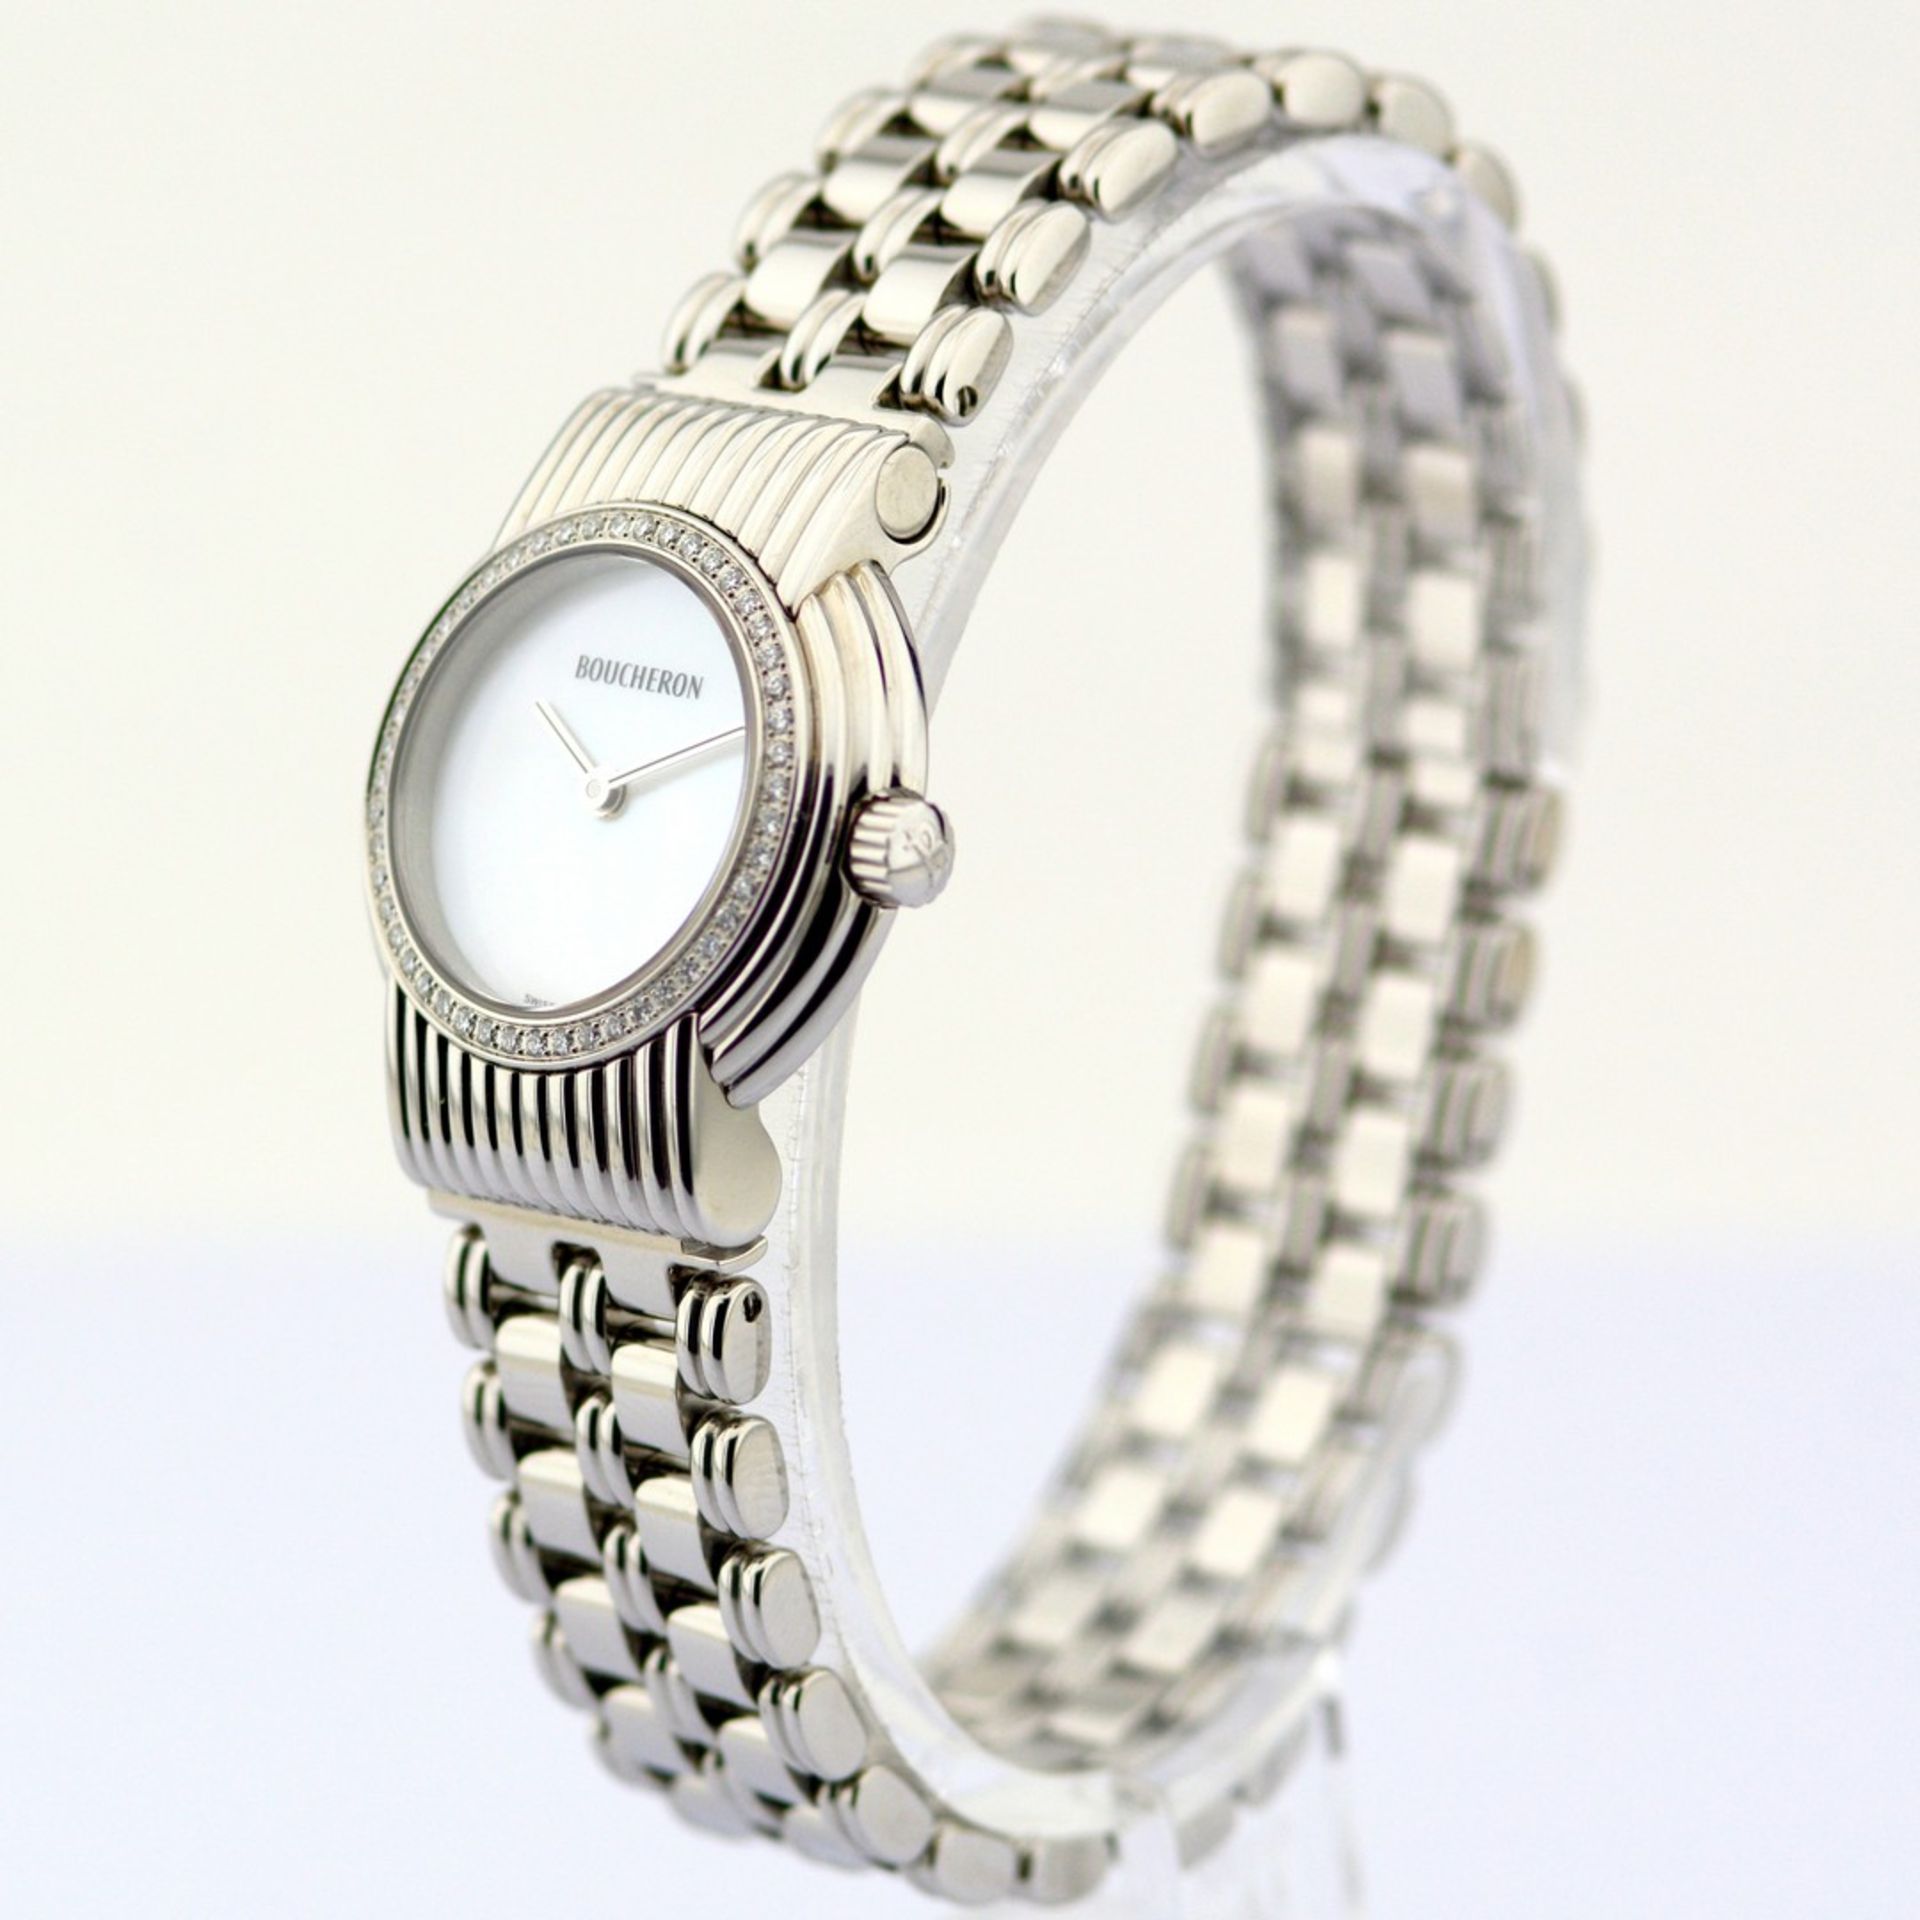 Boucheron / AJ 411367 Diamond Case Mother of pearl - Lady's Steel Wristwatch - Image 10 of 13